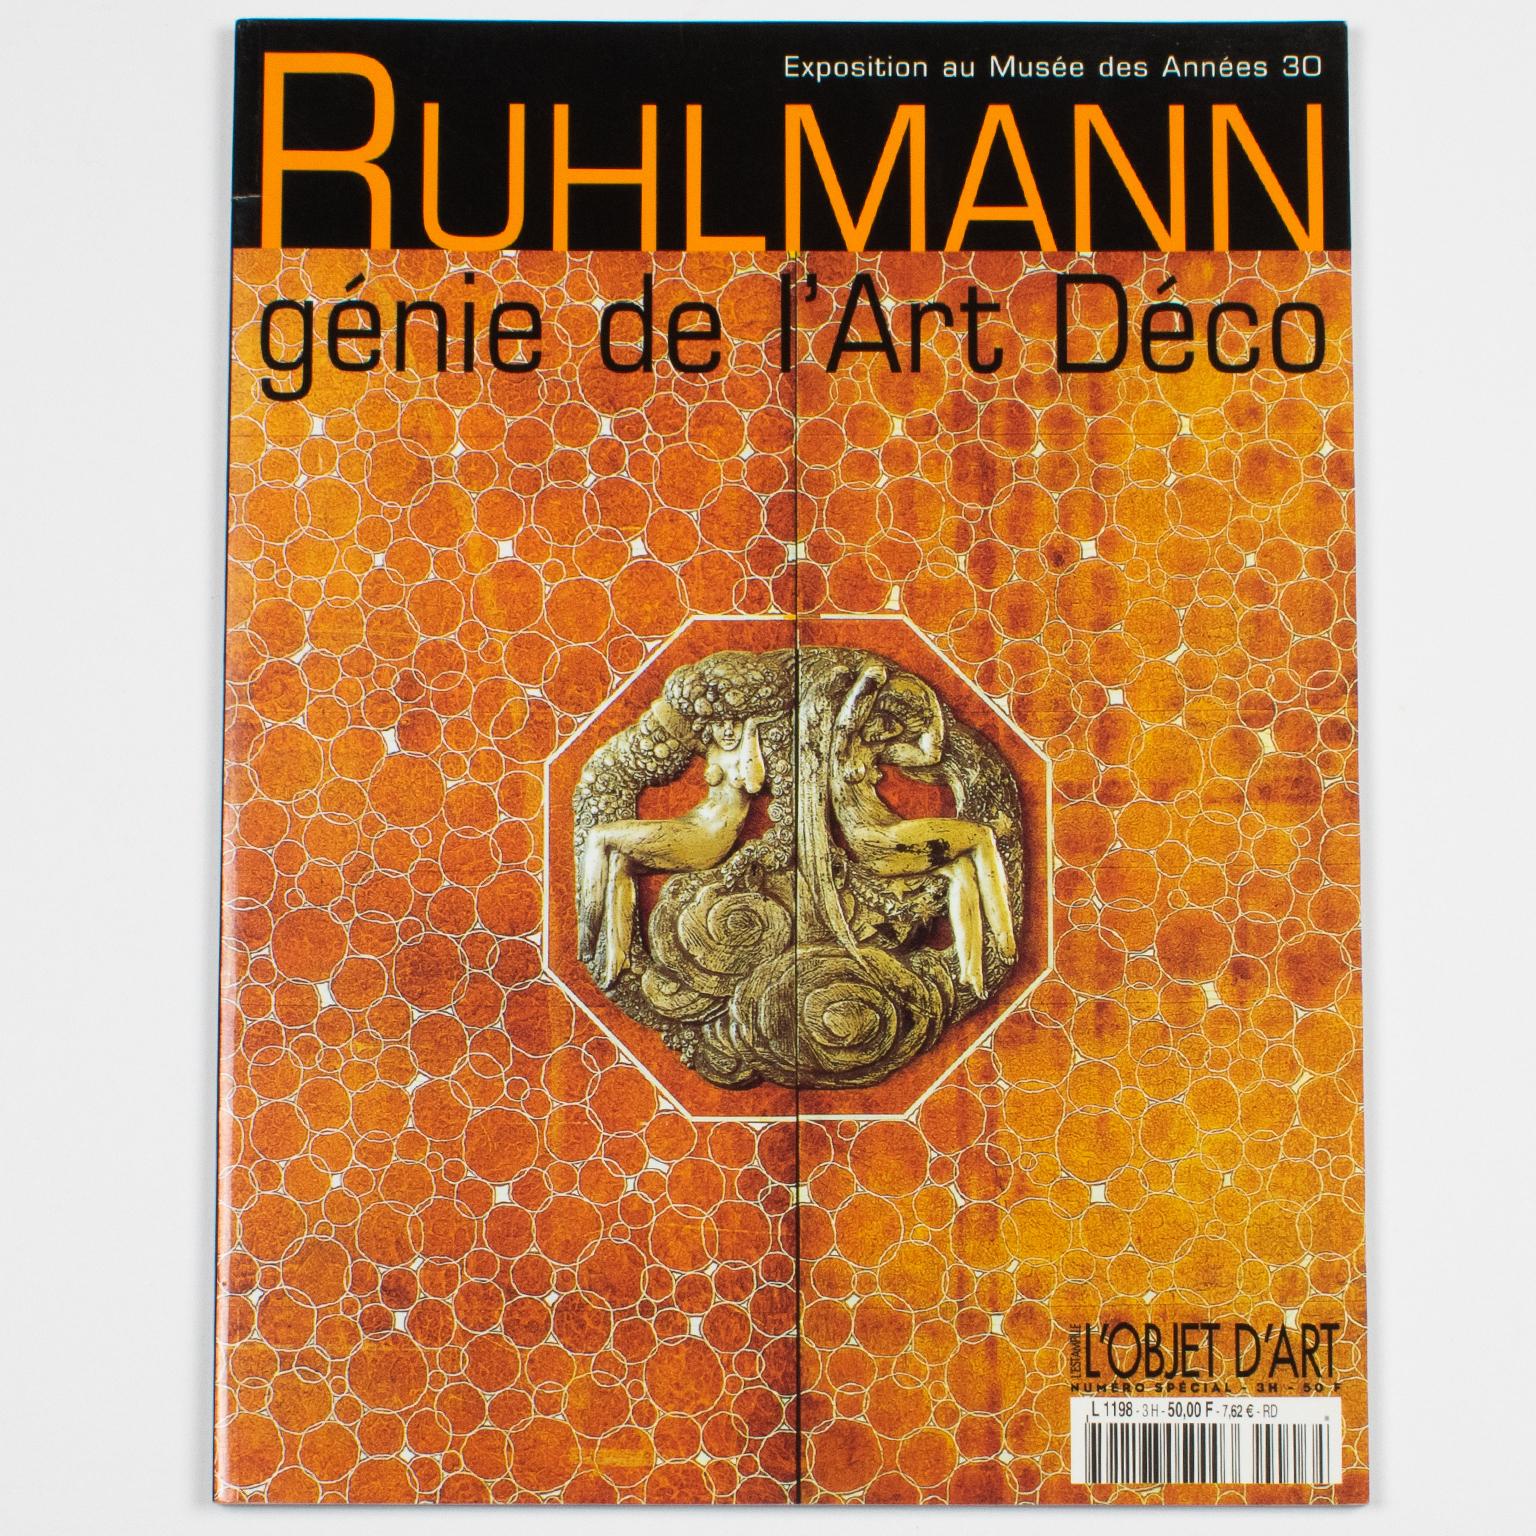 Modern Ruhlmann, Art Deco Genius, French Book - 2002 Exhibition in Museum des Années 30